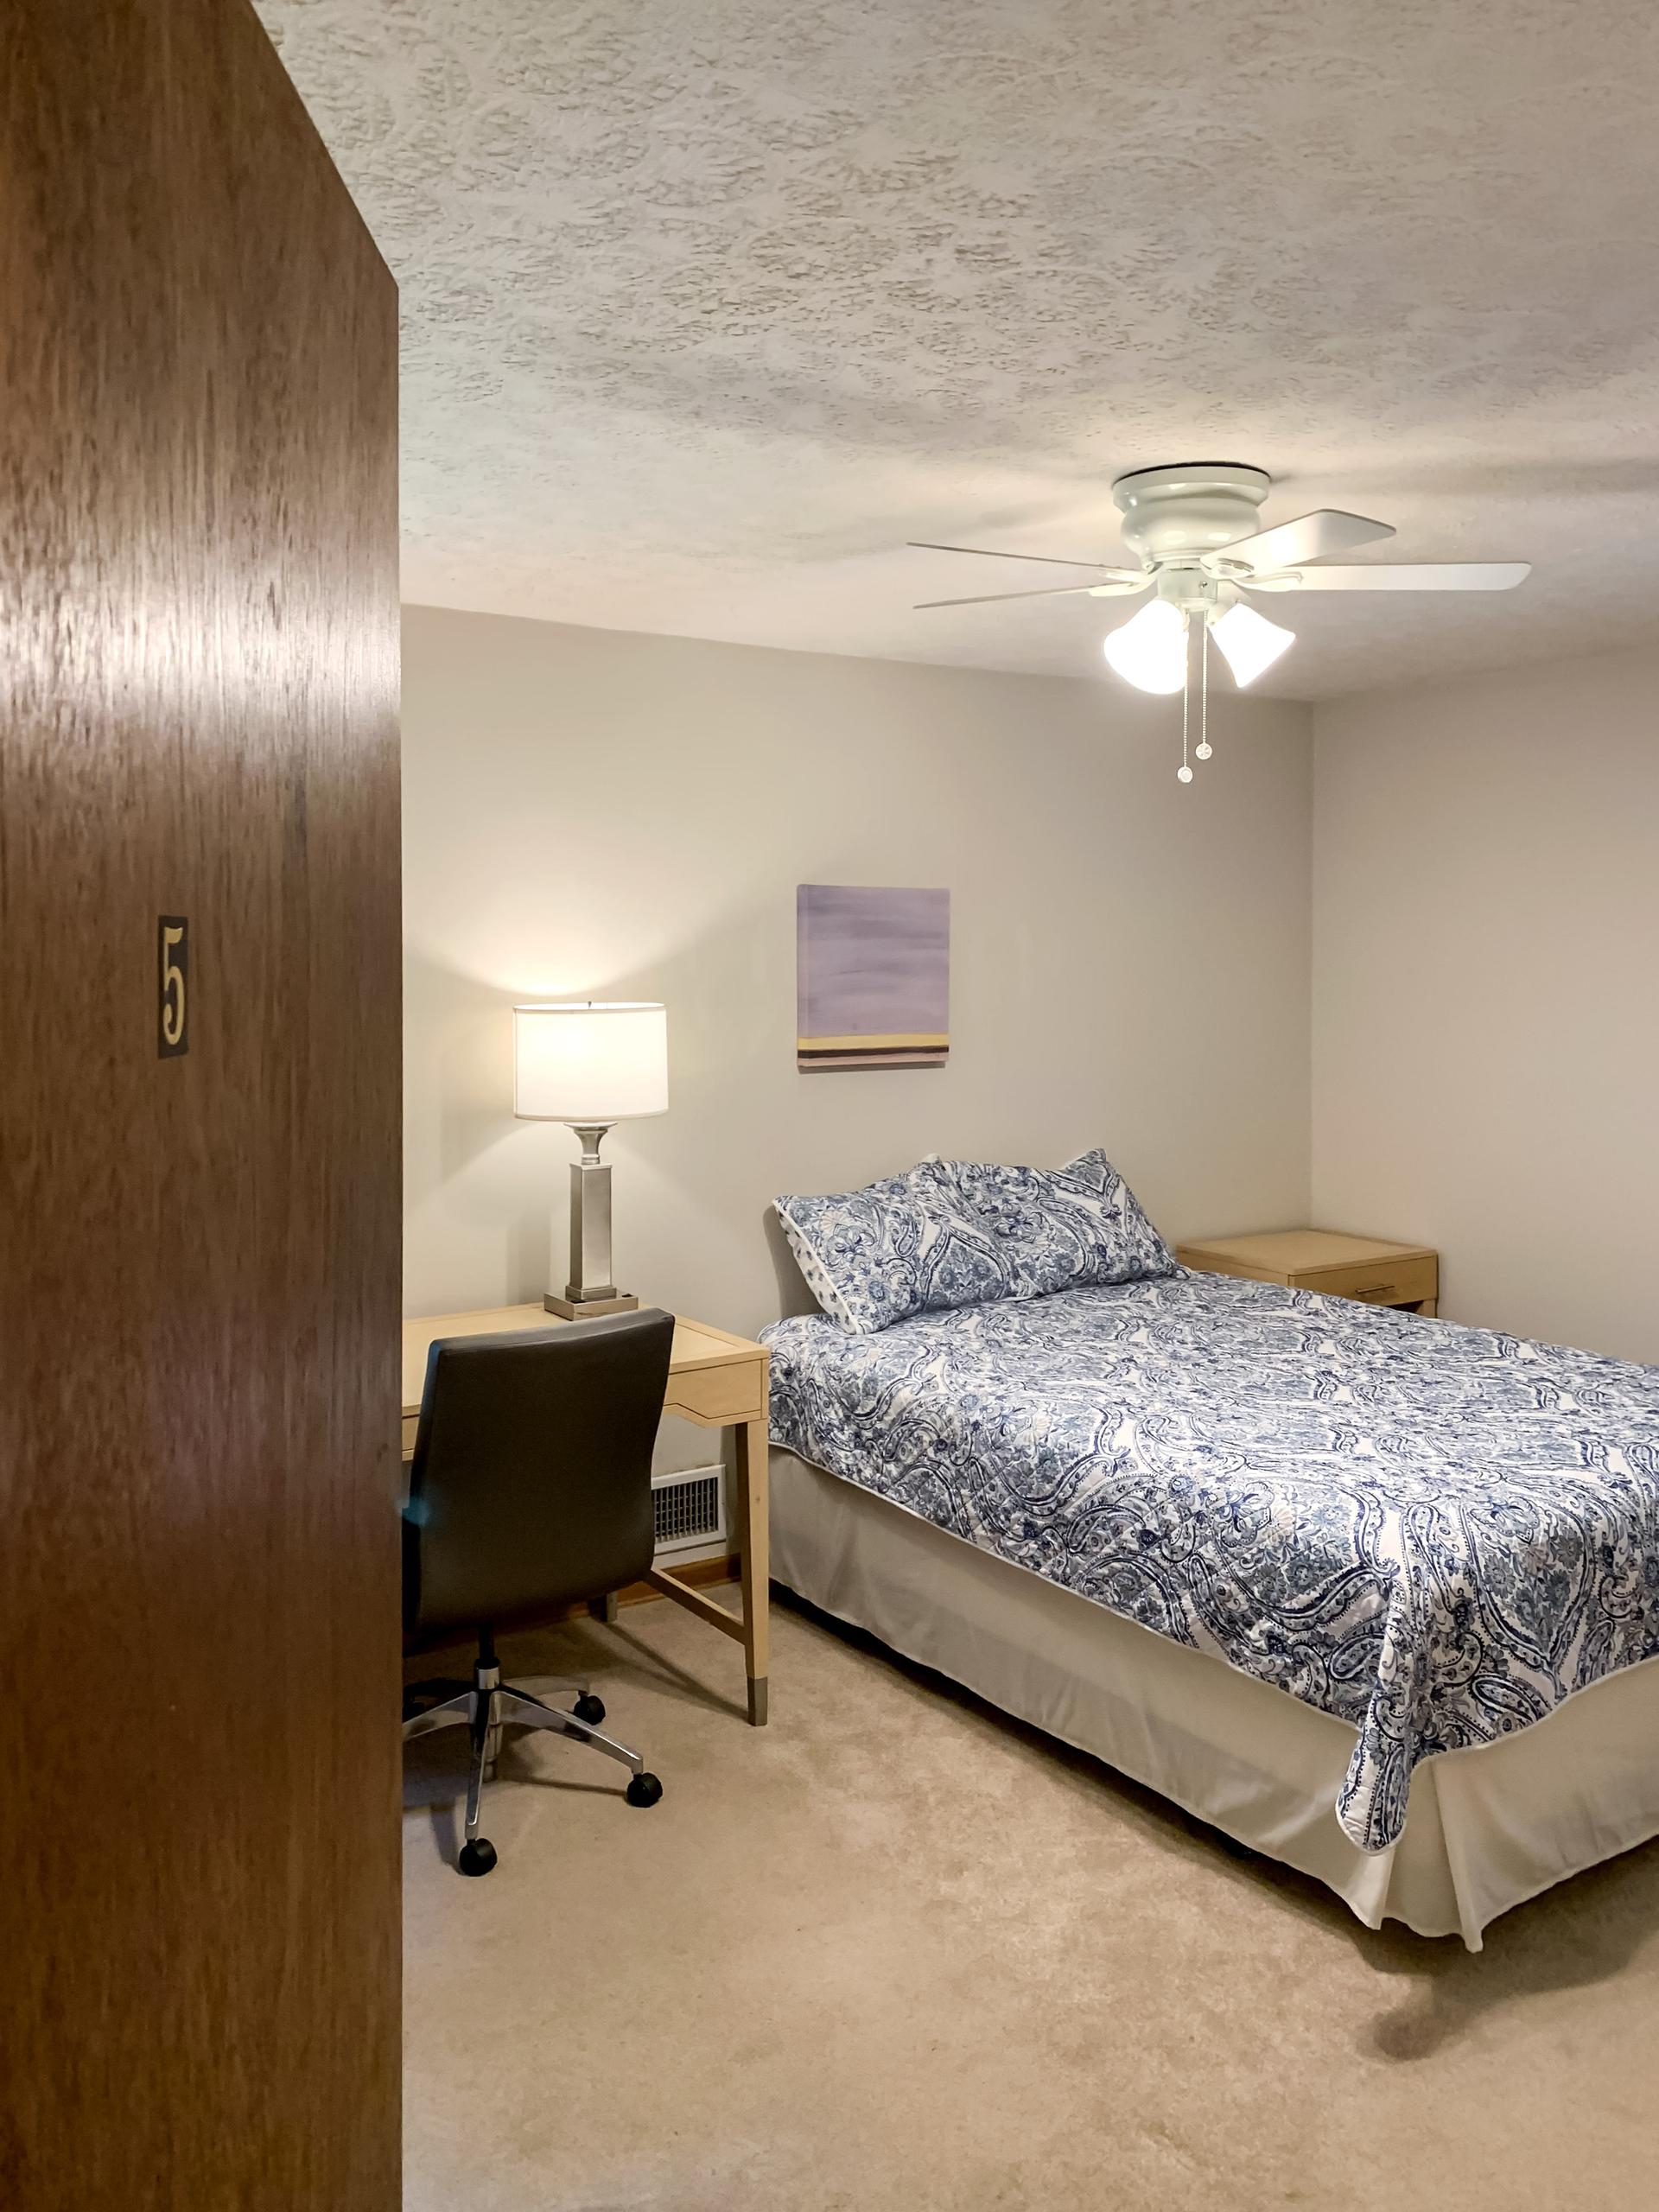 bedroom, detected: ceiling fan, bed